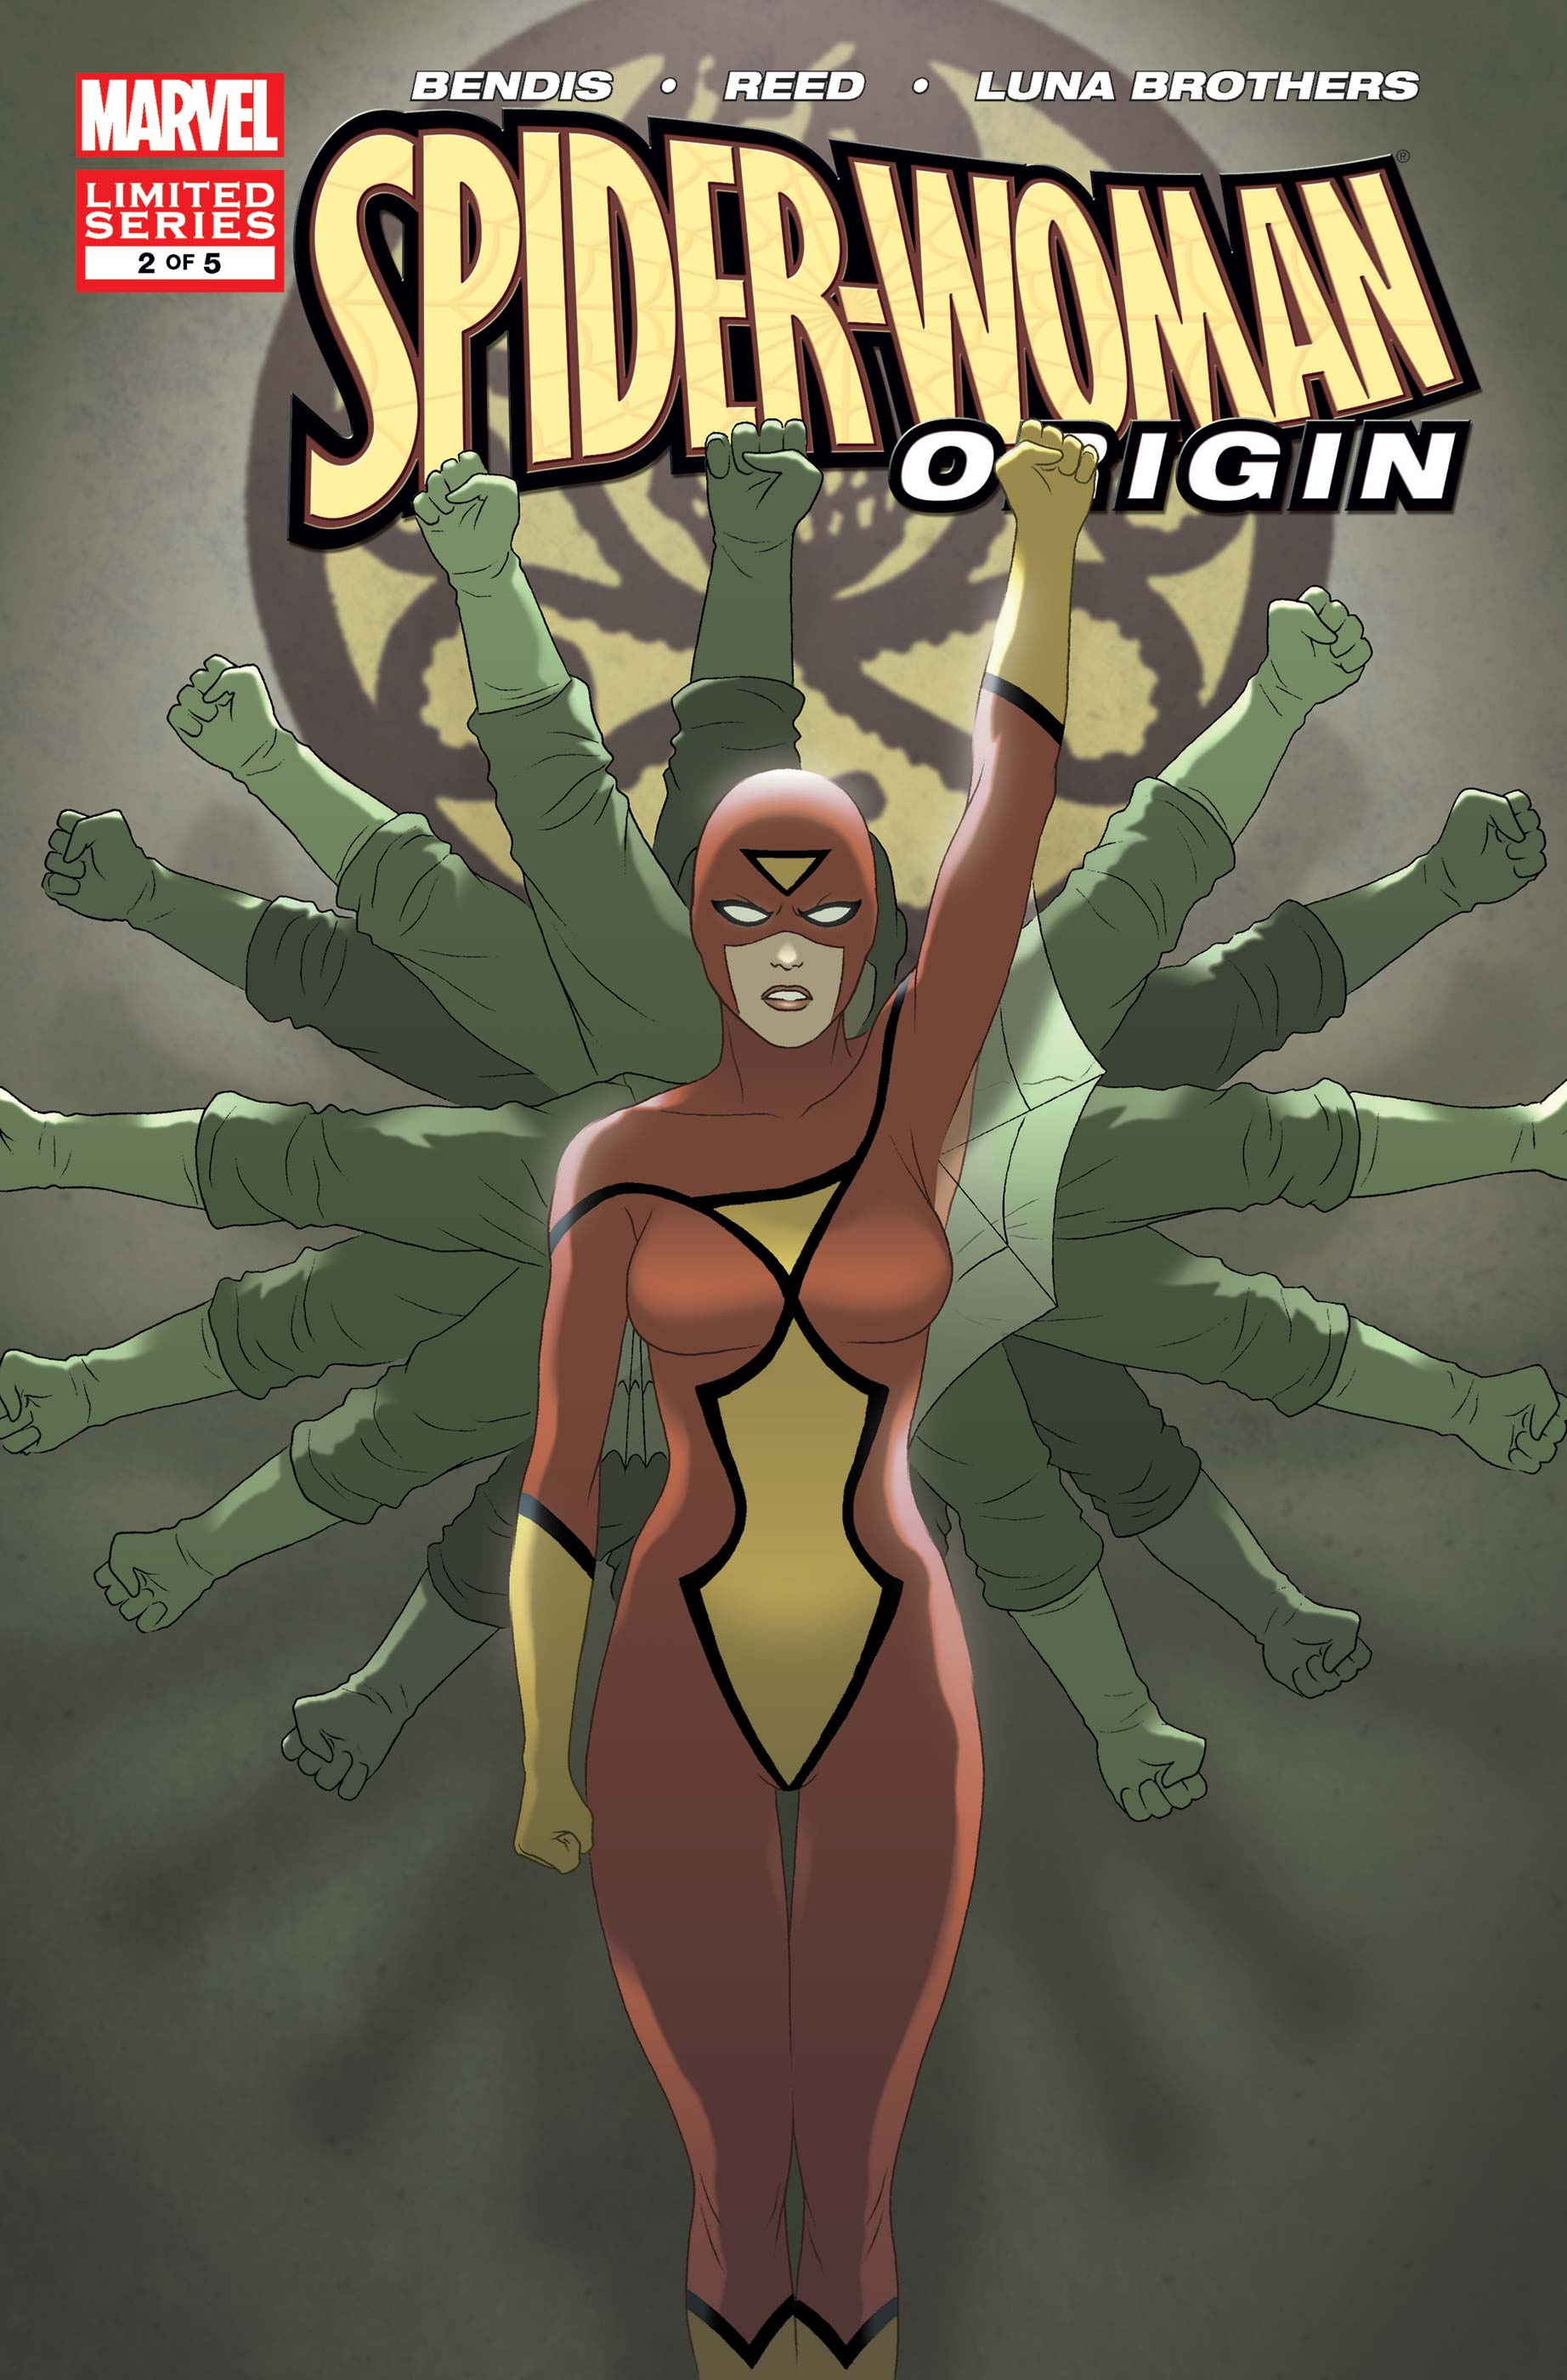 Spider-Woman: Origin (2005) #2